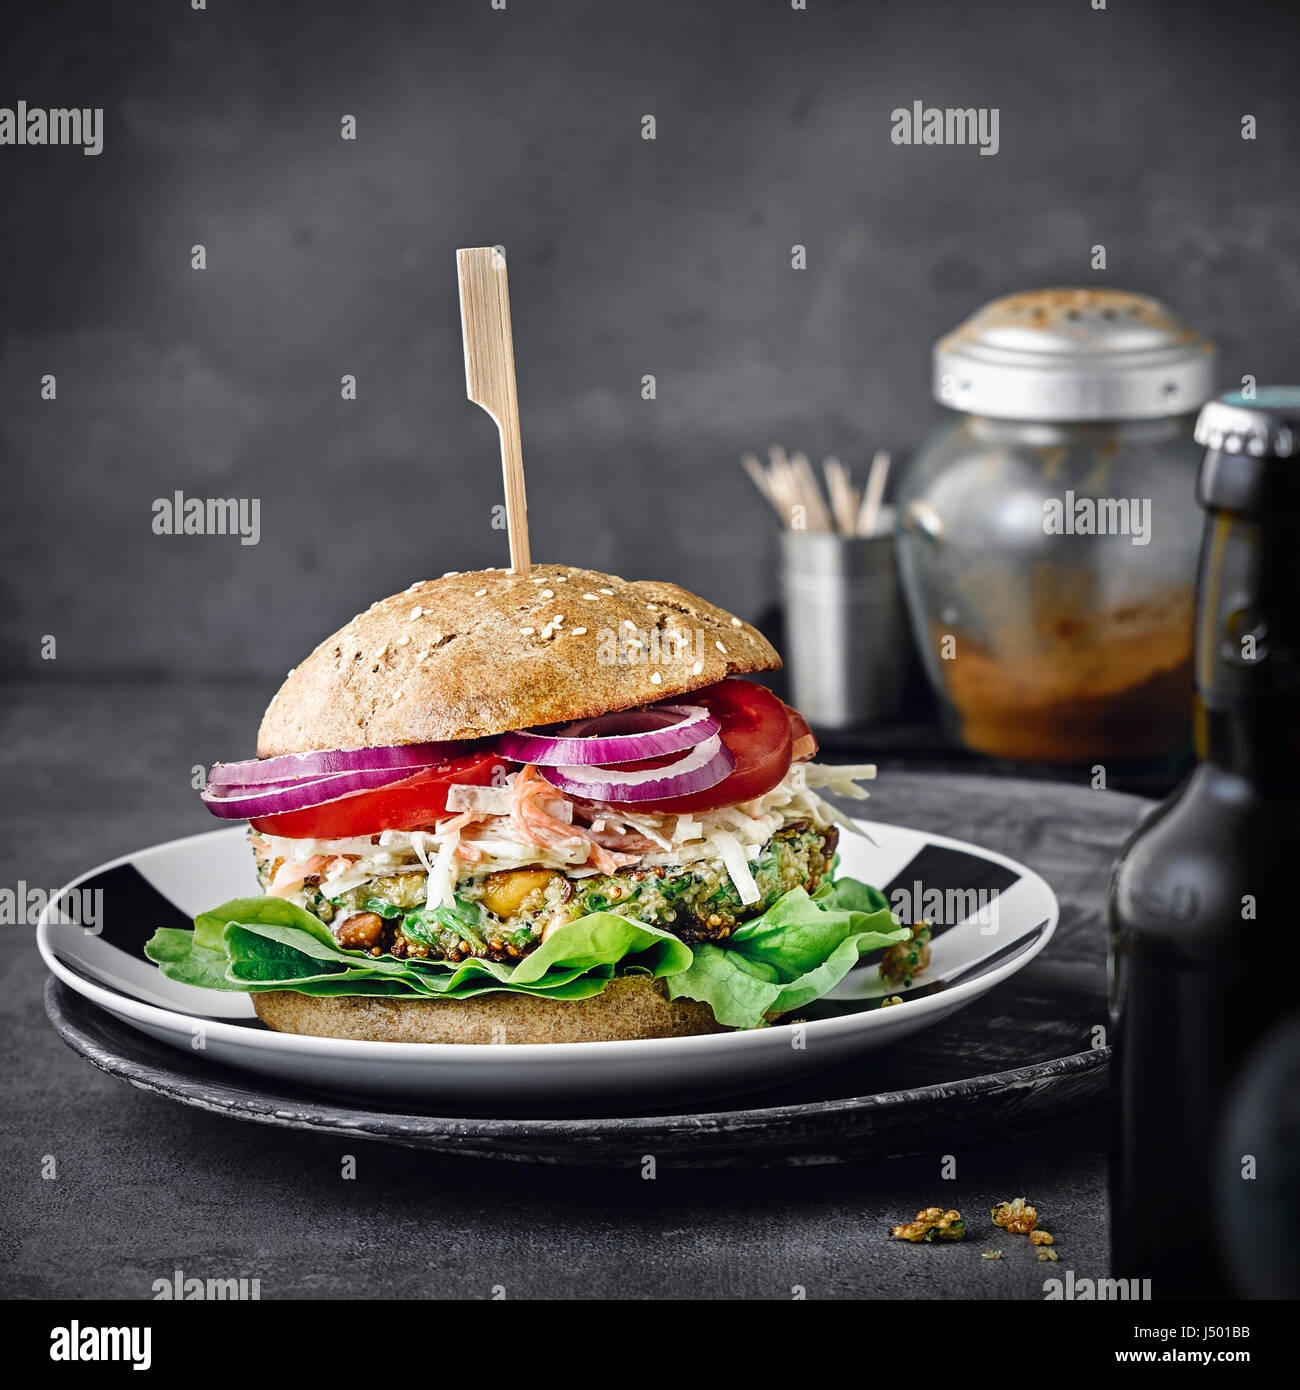 Burger with quinoa and broccoli Stock Photo